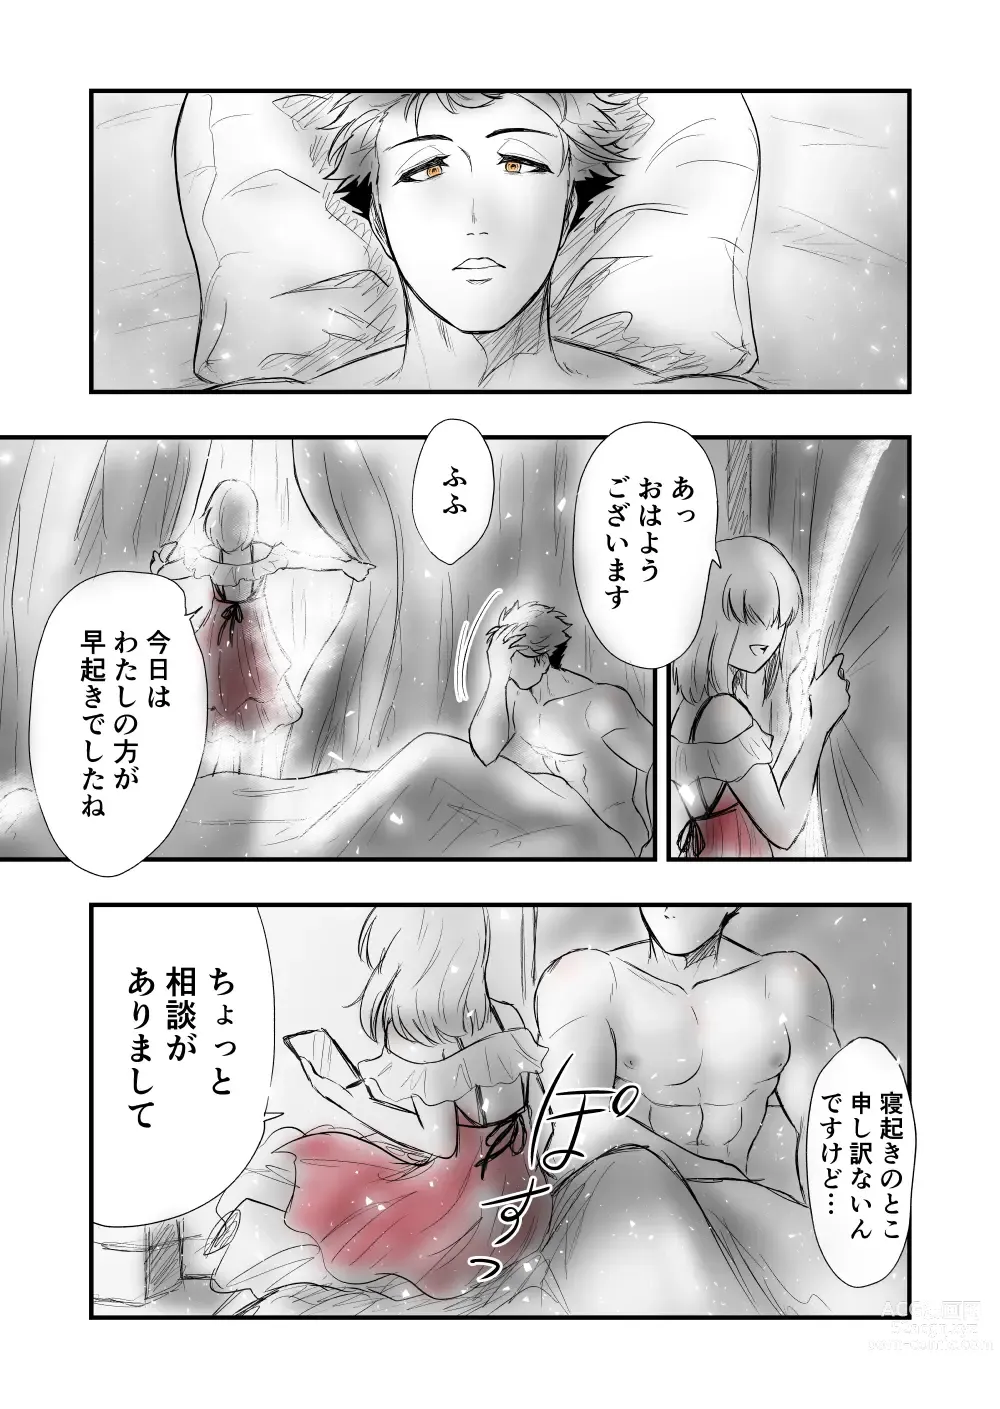 Page 51 of doujinshi 4